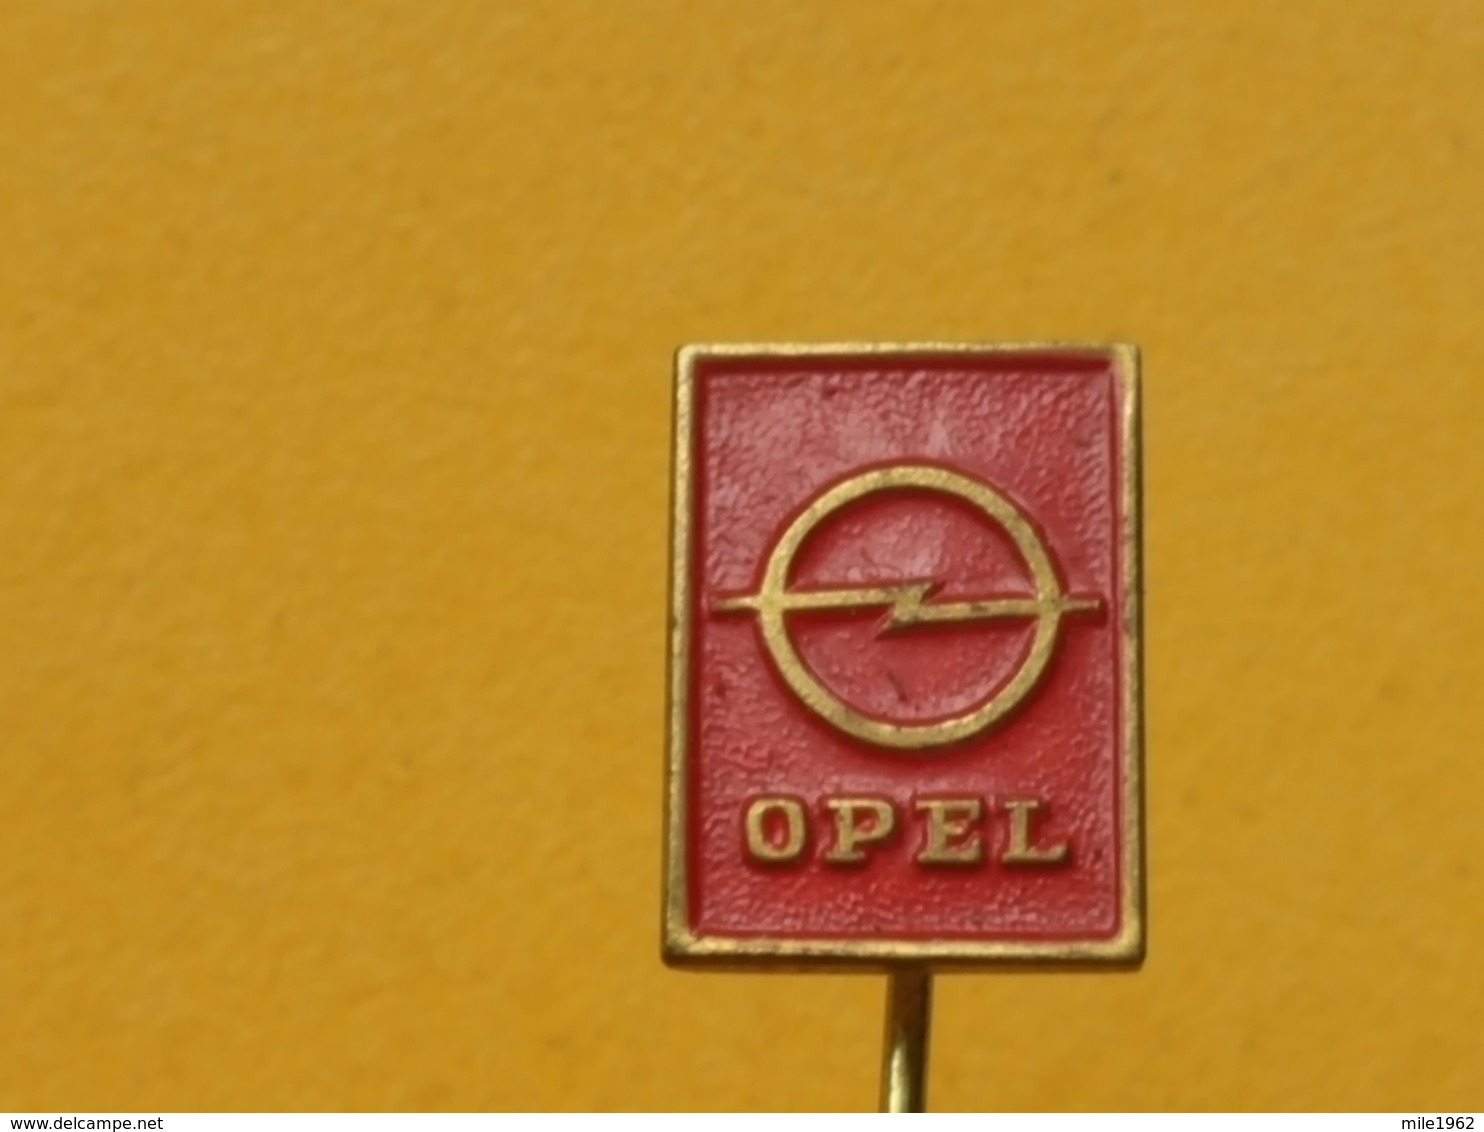 LIST 125 - OPEL, AUTO INDUSTRY, CAR, AUTOMOTIVE - Opel